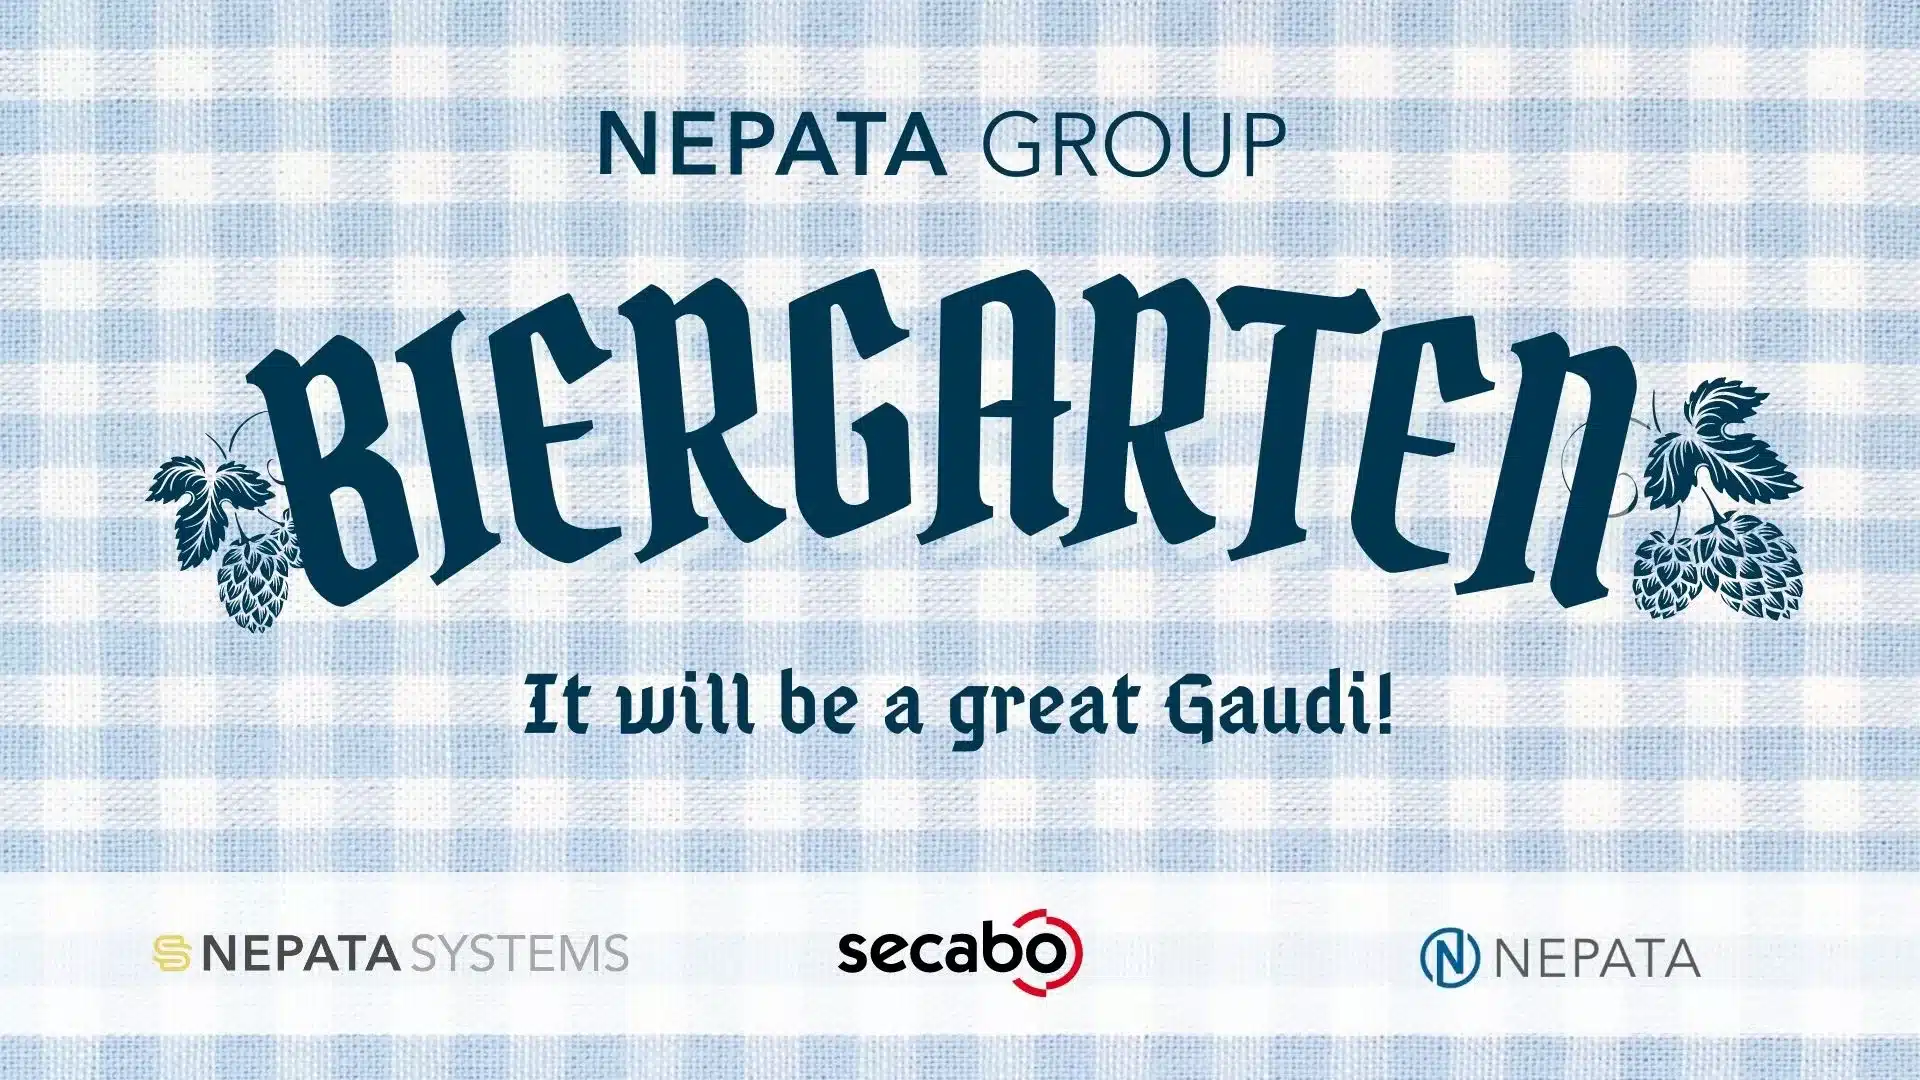 Nepata Group Biergarten